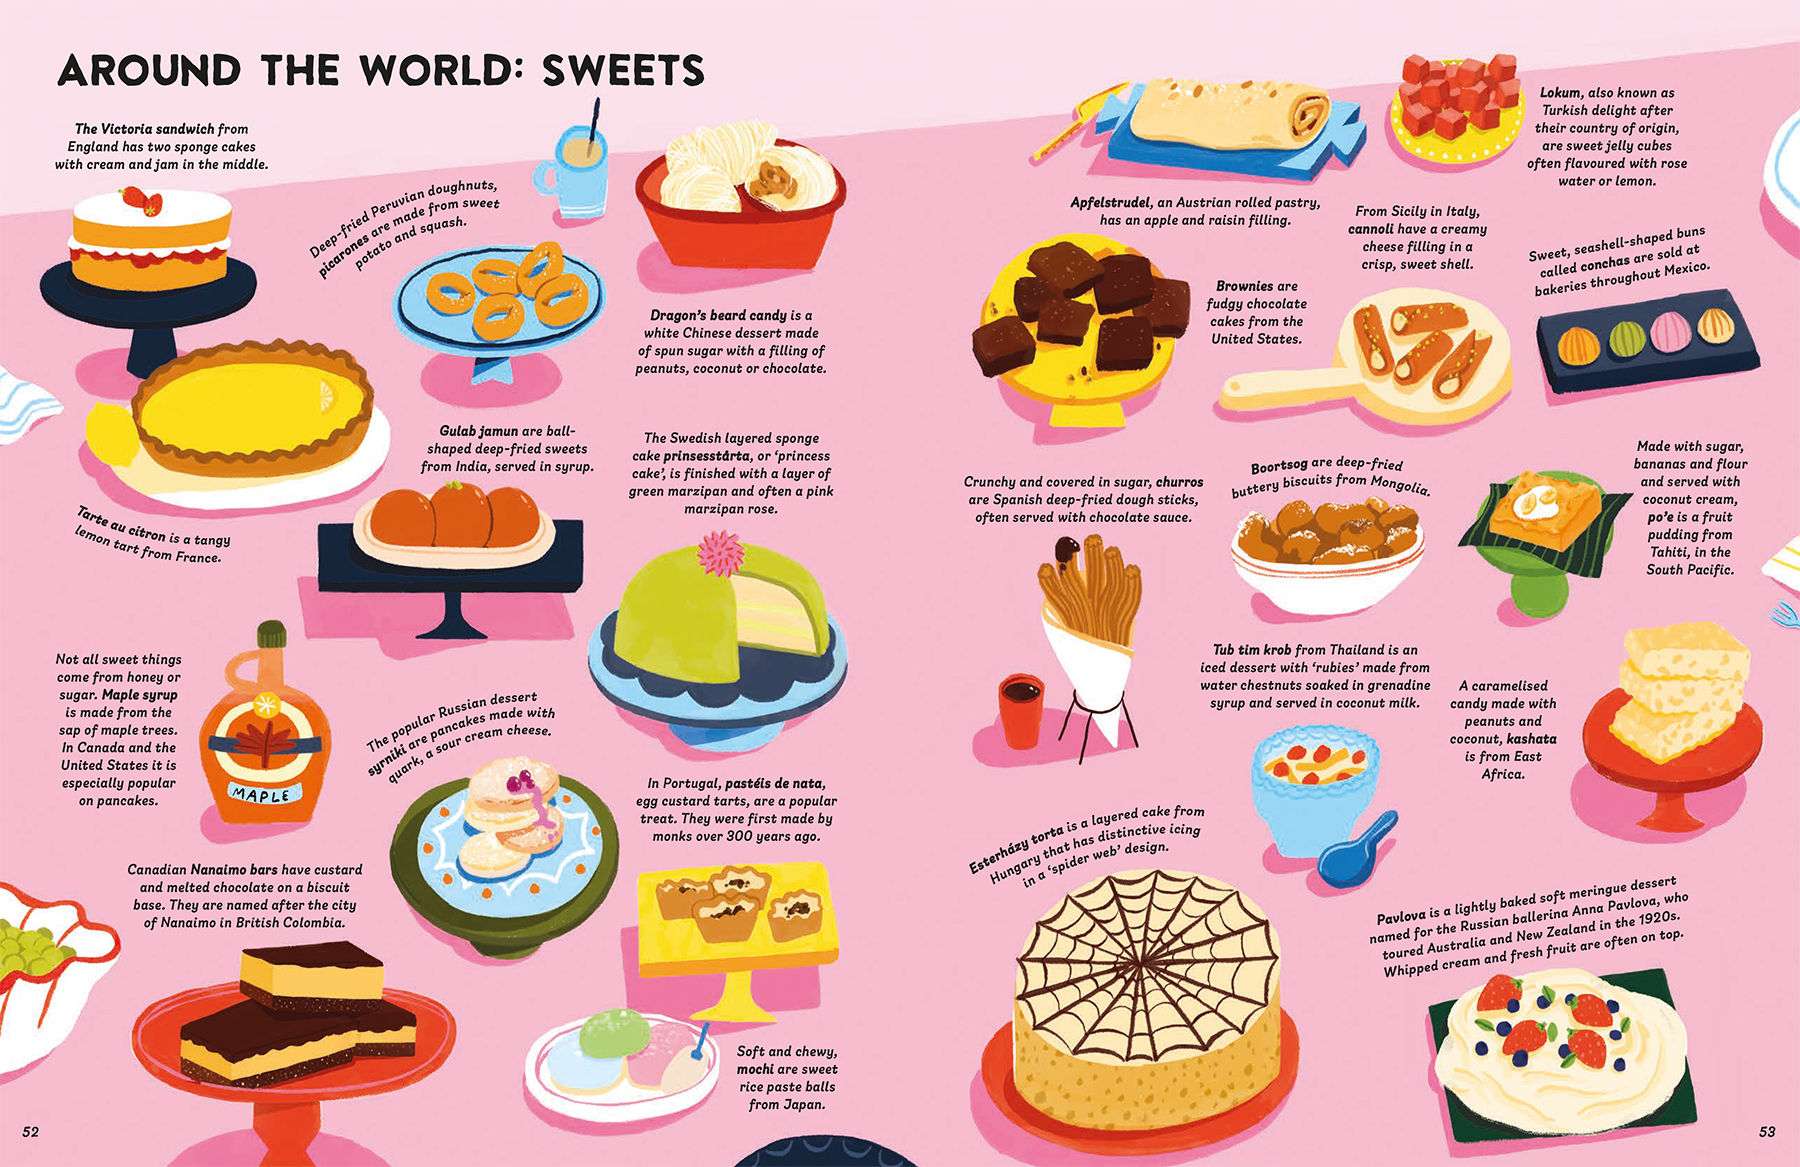 world-of-food-non-fiction-book-illustration-sweets-victorian-sandwich-tarte-au-citron-gulab-jamun-churros-brownies-apfelstrudel-cannoli-conchas-lokum-violeta-noy-1